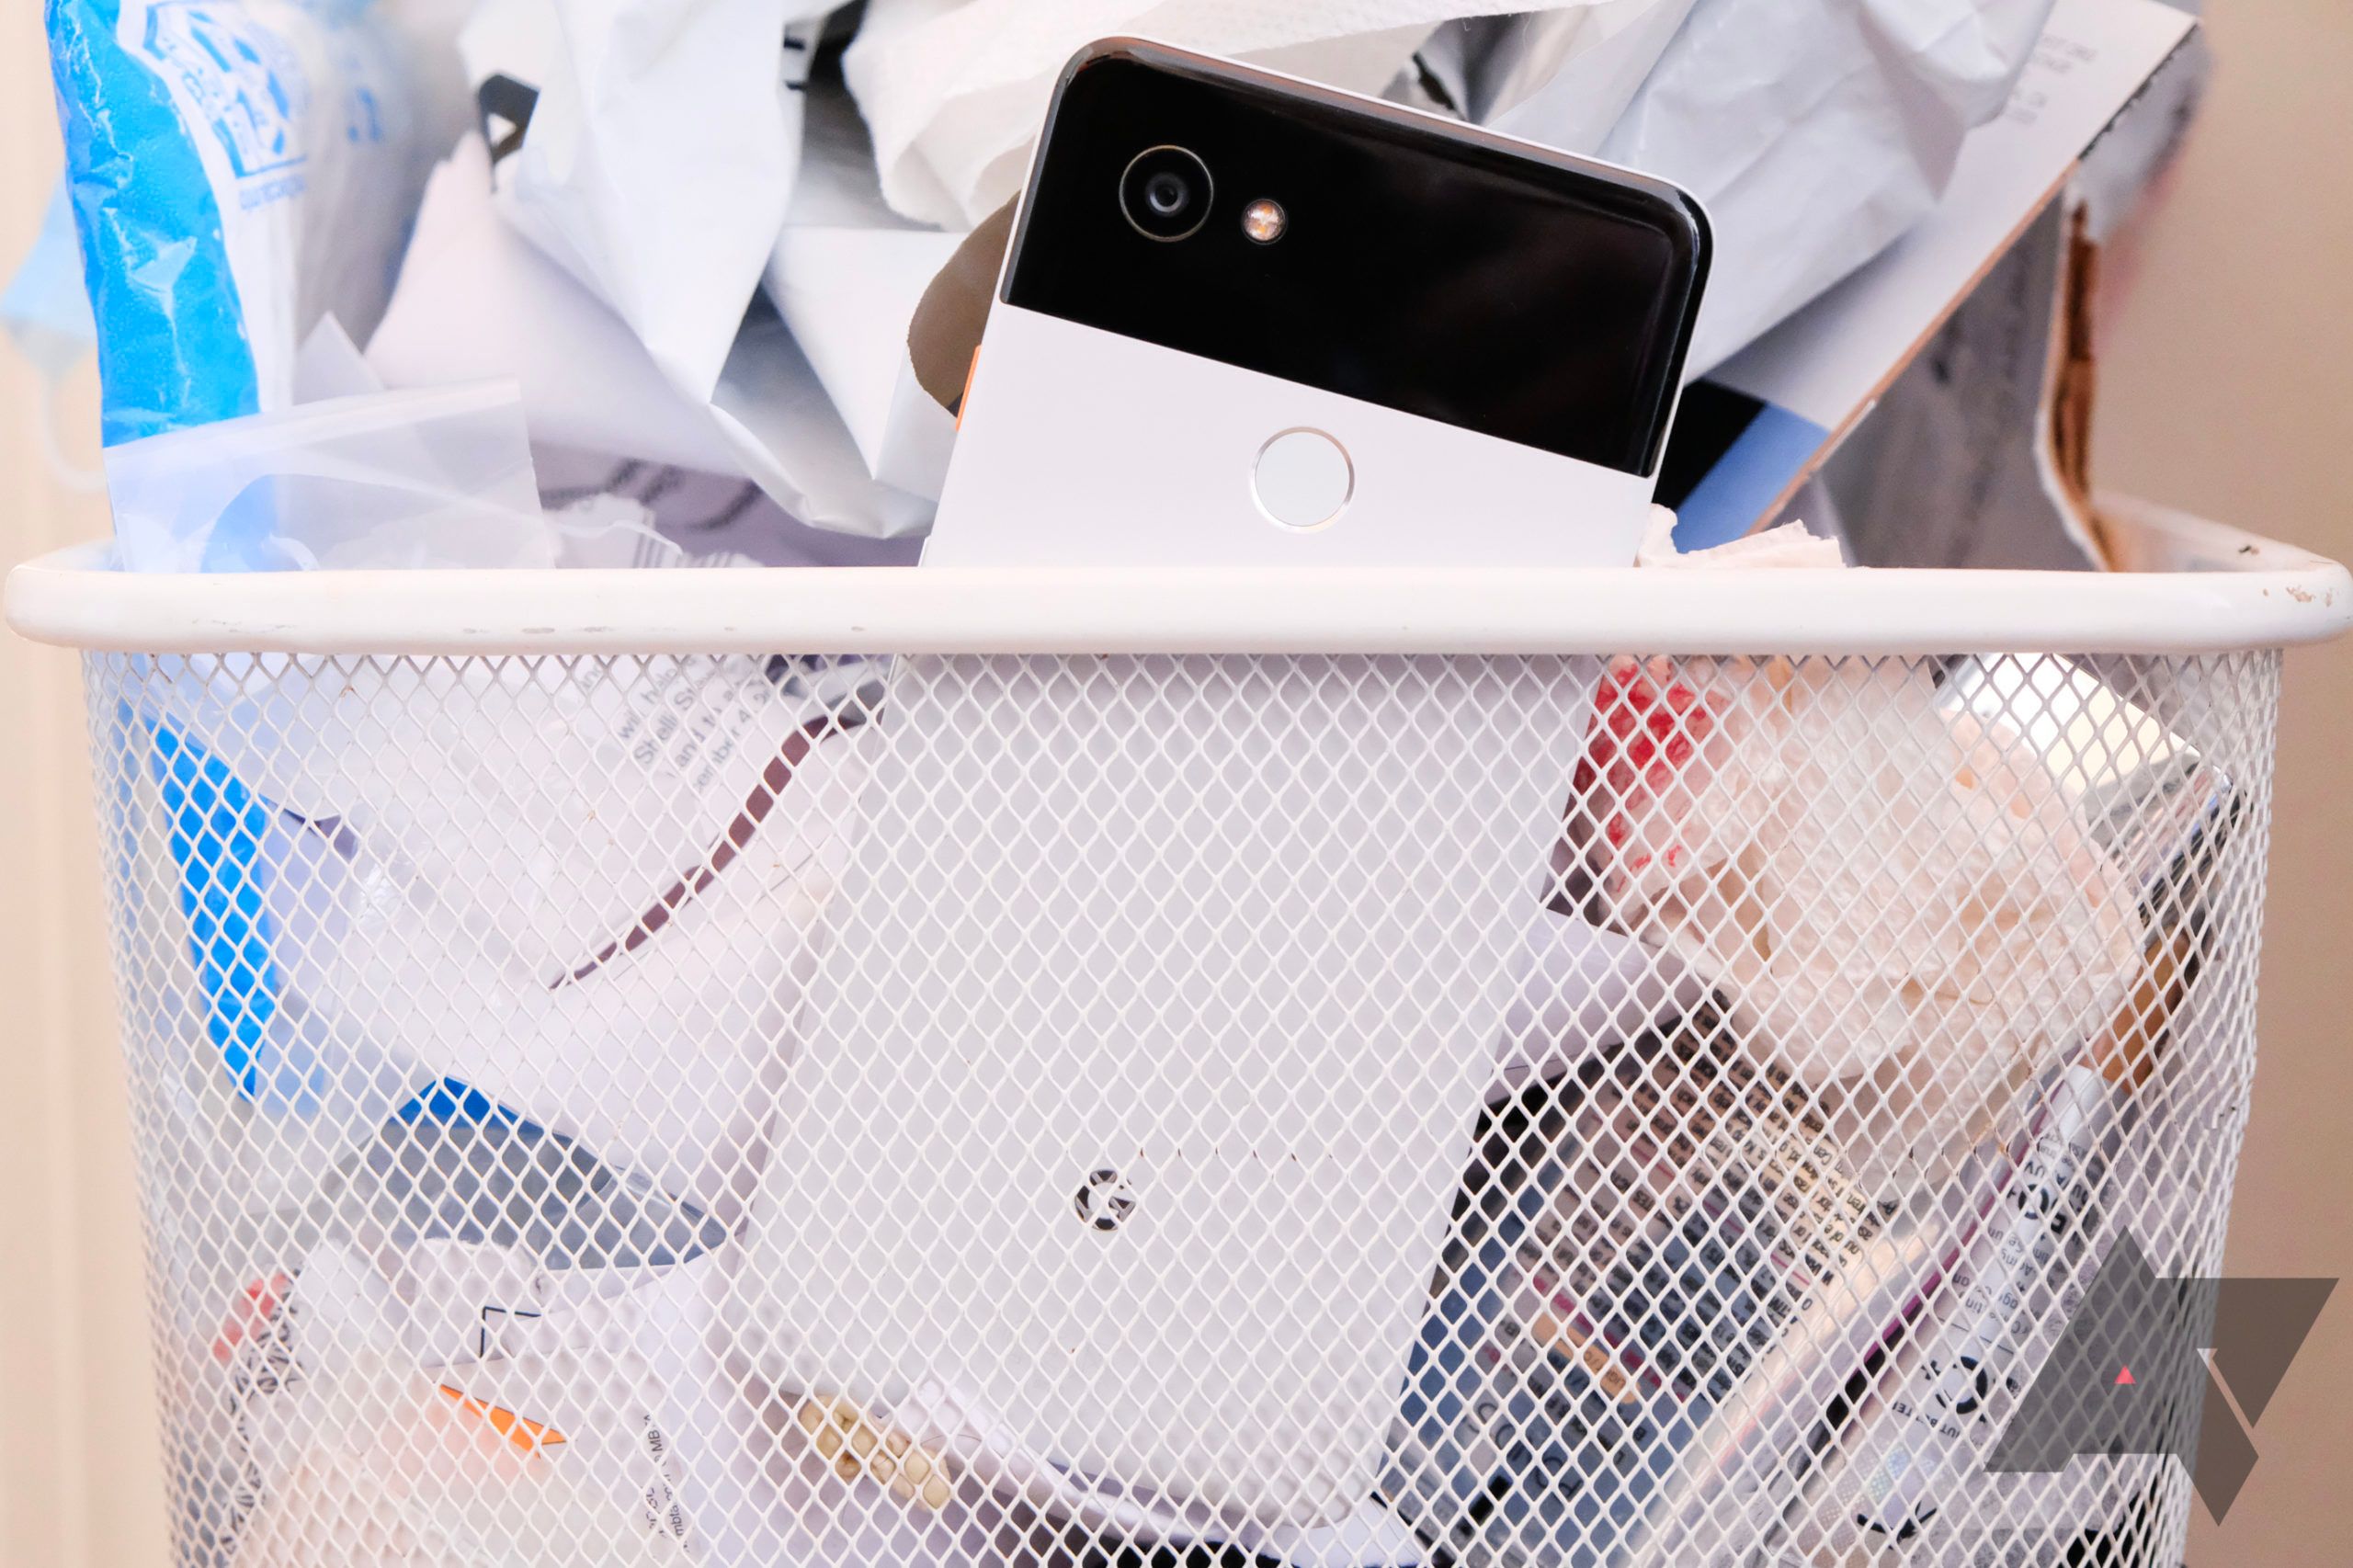 A black and white Google Pixel 2 in a mesh metal waste bin